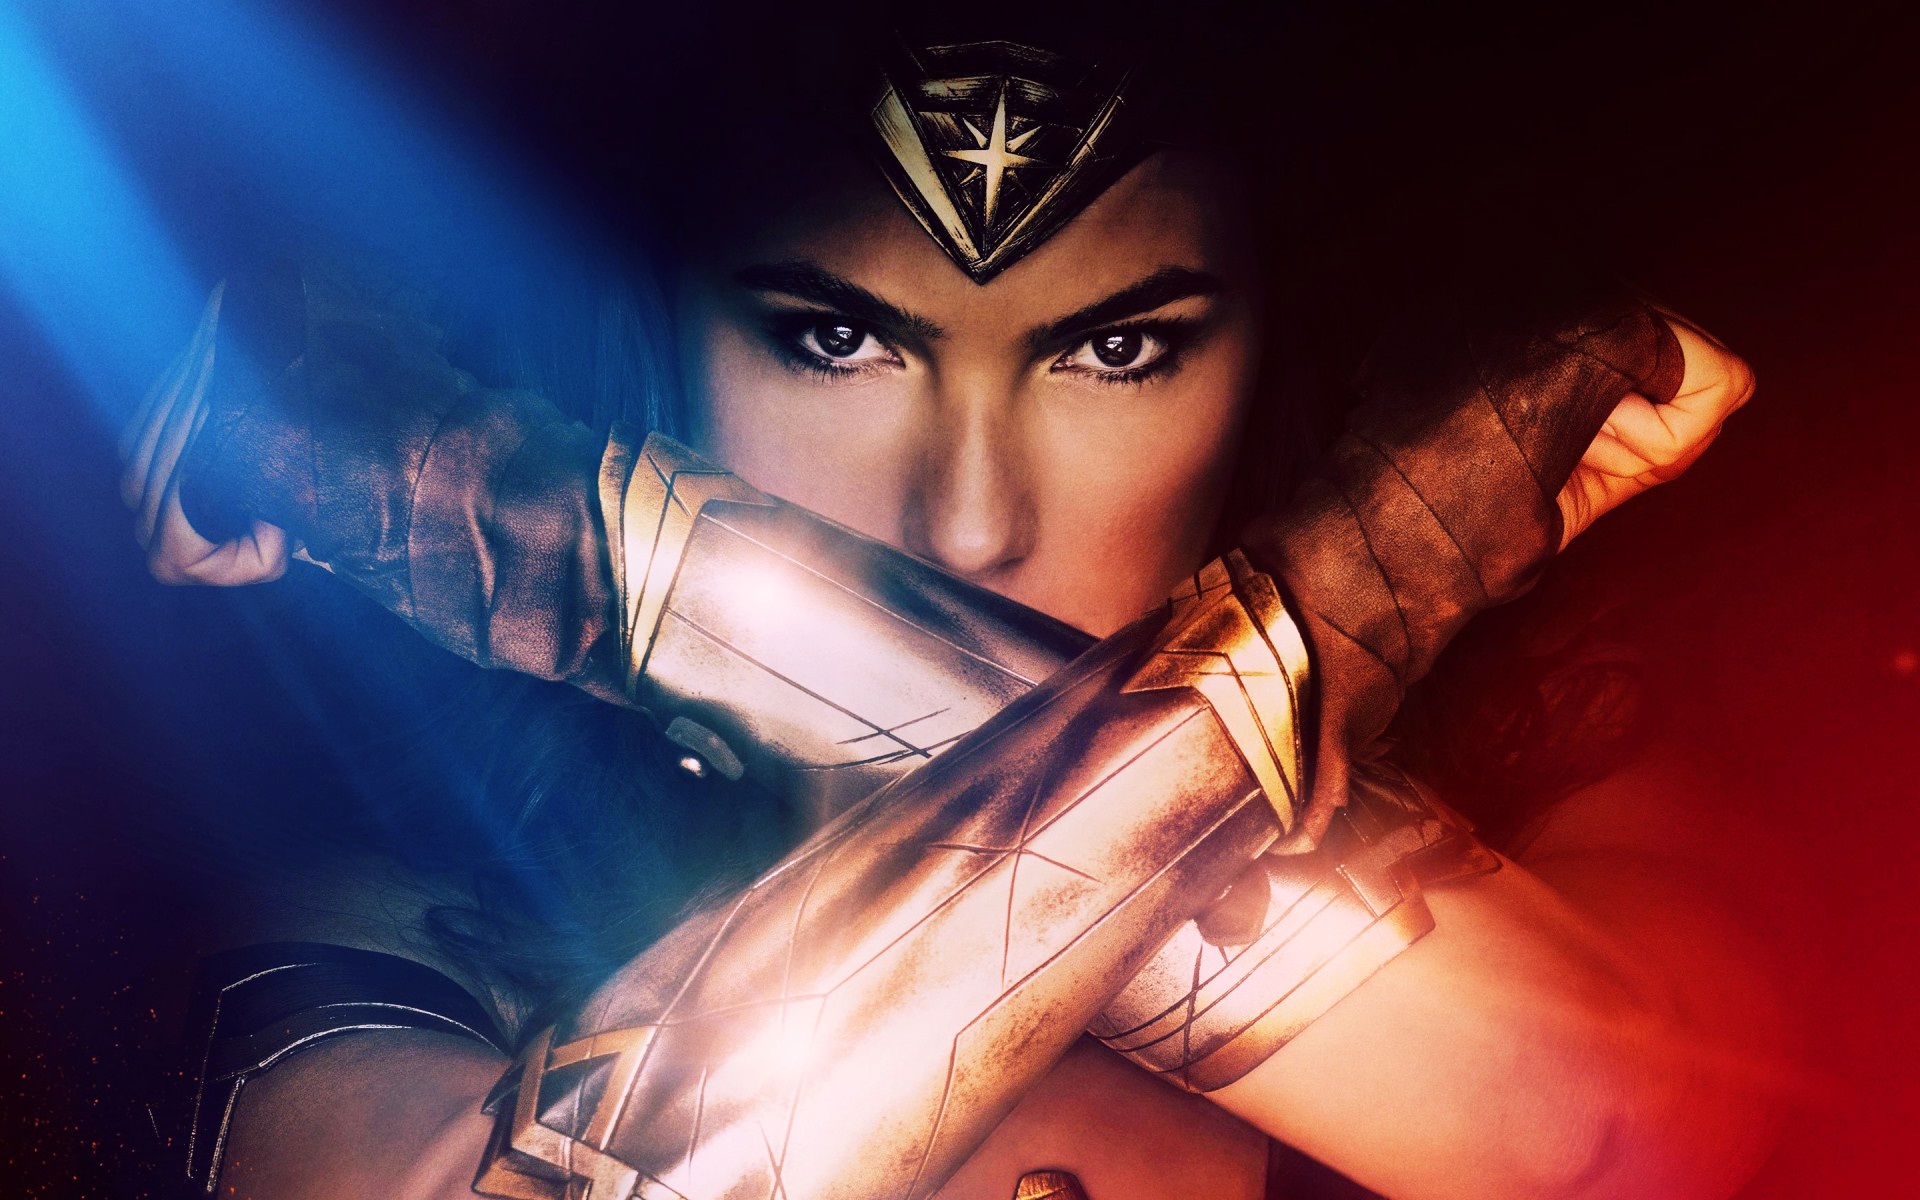 Wonder Woman วันเดอร์ วูแมน